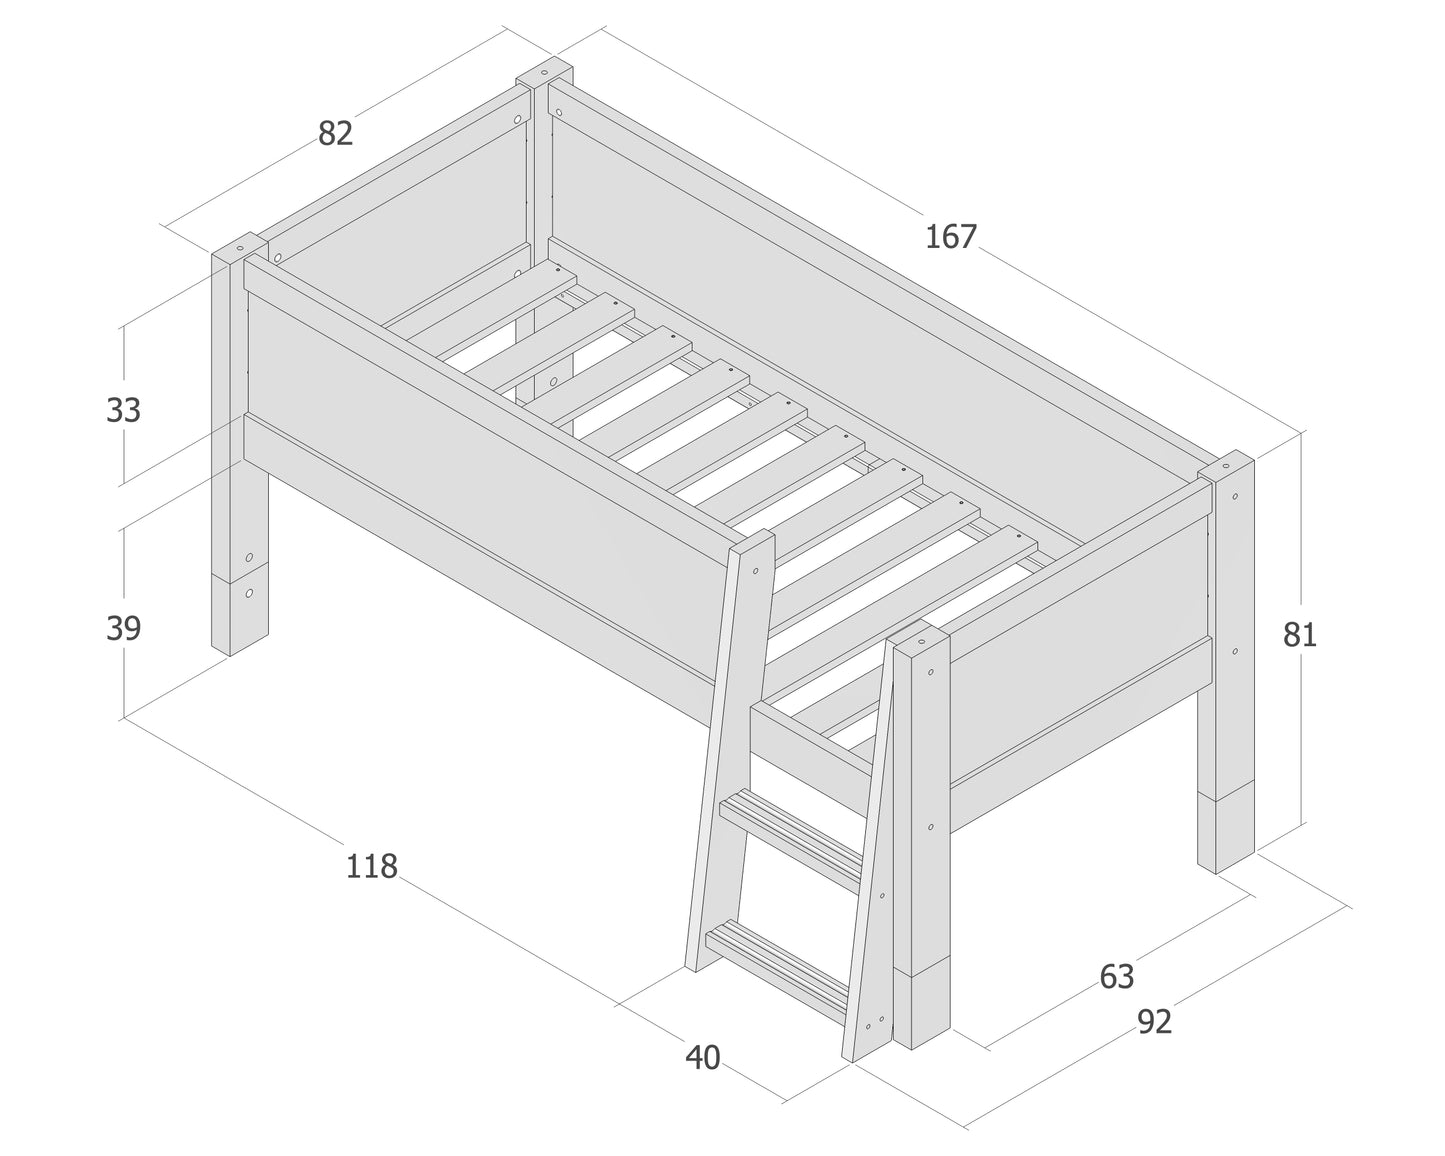 Jerwen - Kompaktne voodi turvatõkke ja redeliga - 70x160 cm